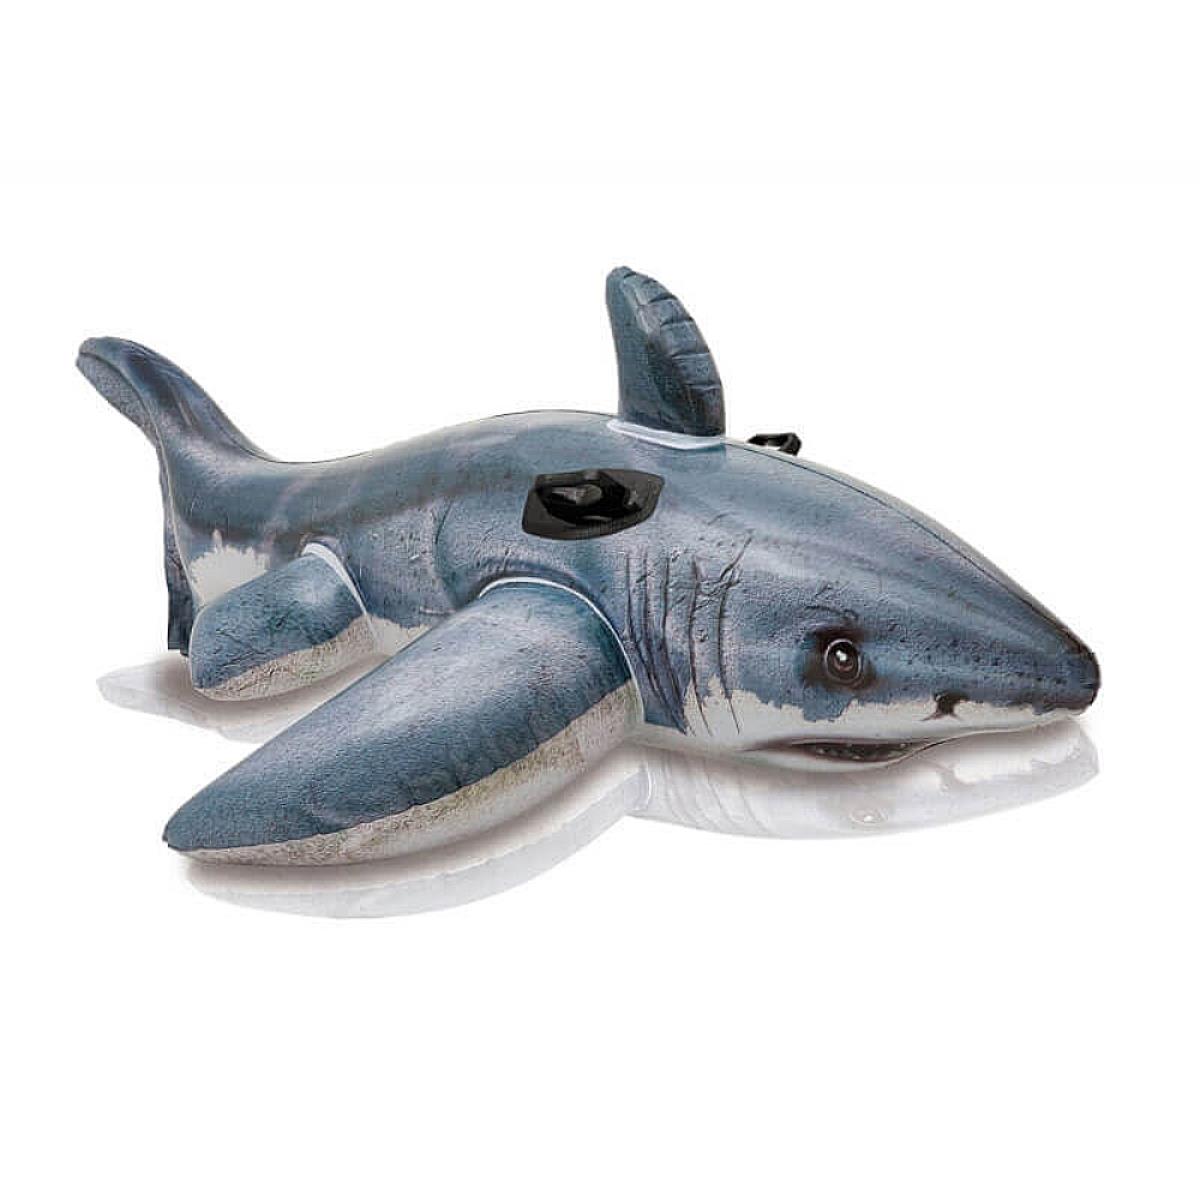 Игрушка надувная Акула (57525)  INTEX игрушка надувная